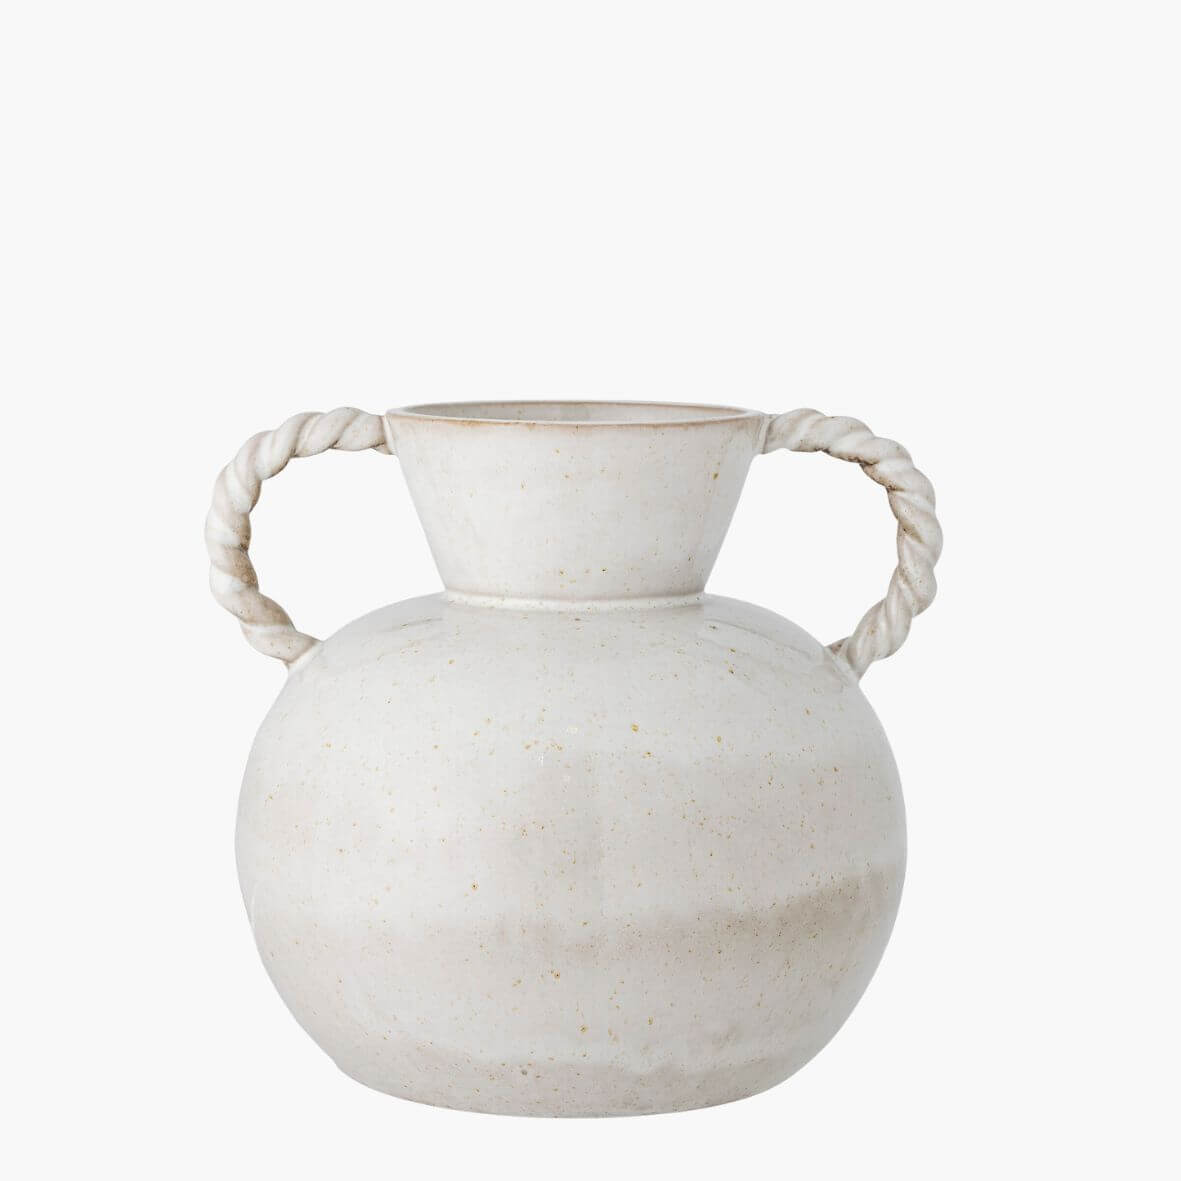 White stoneware vase with handles on white background